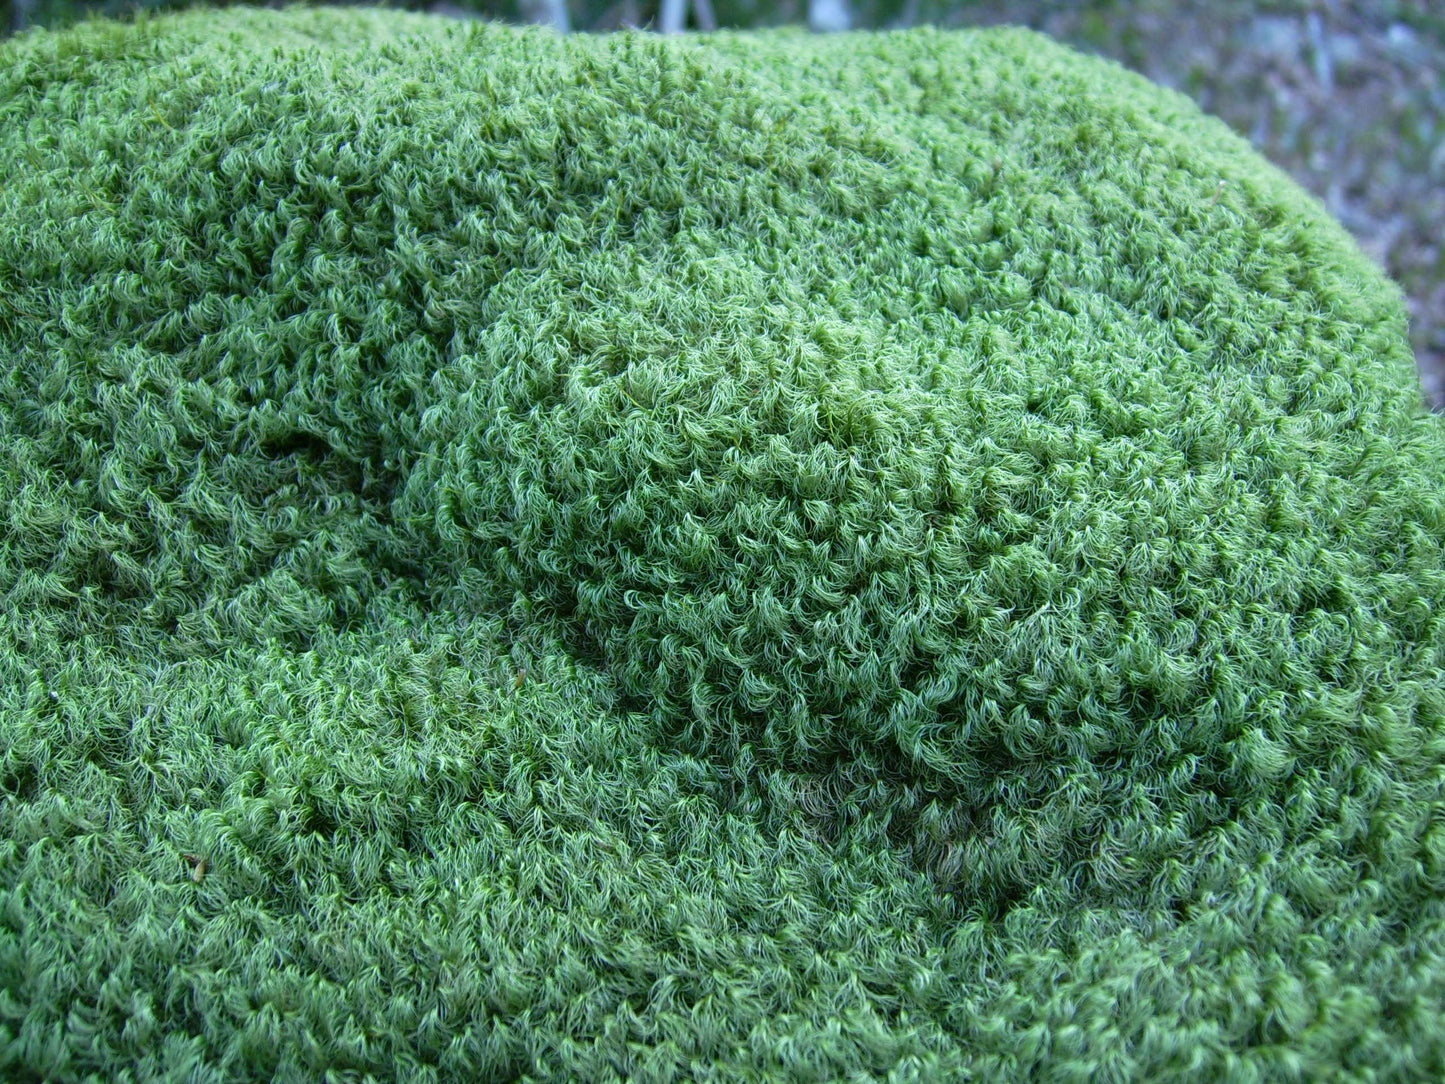 cushion terrarium mood moss Dicranum Scoparium, with Phytosanitary certification and Passport, grown by moss supplier